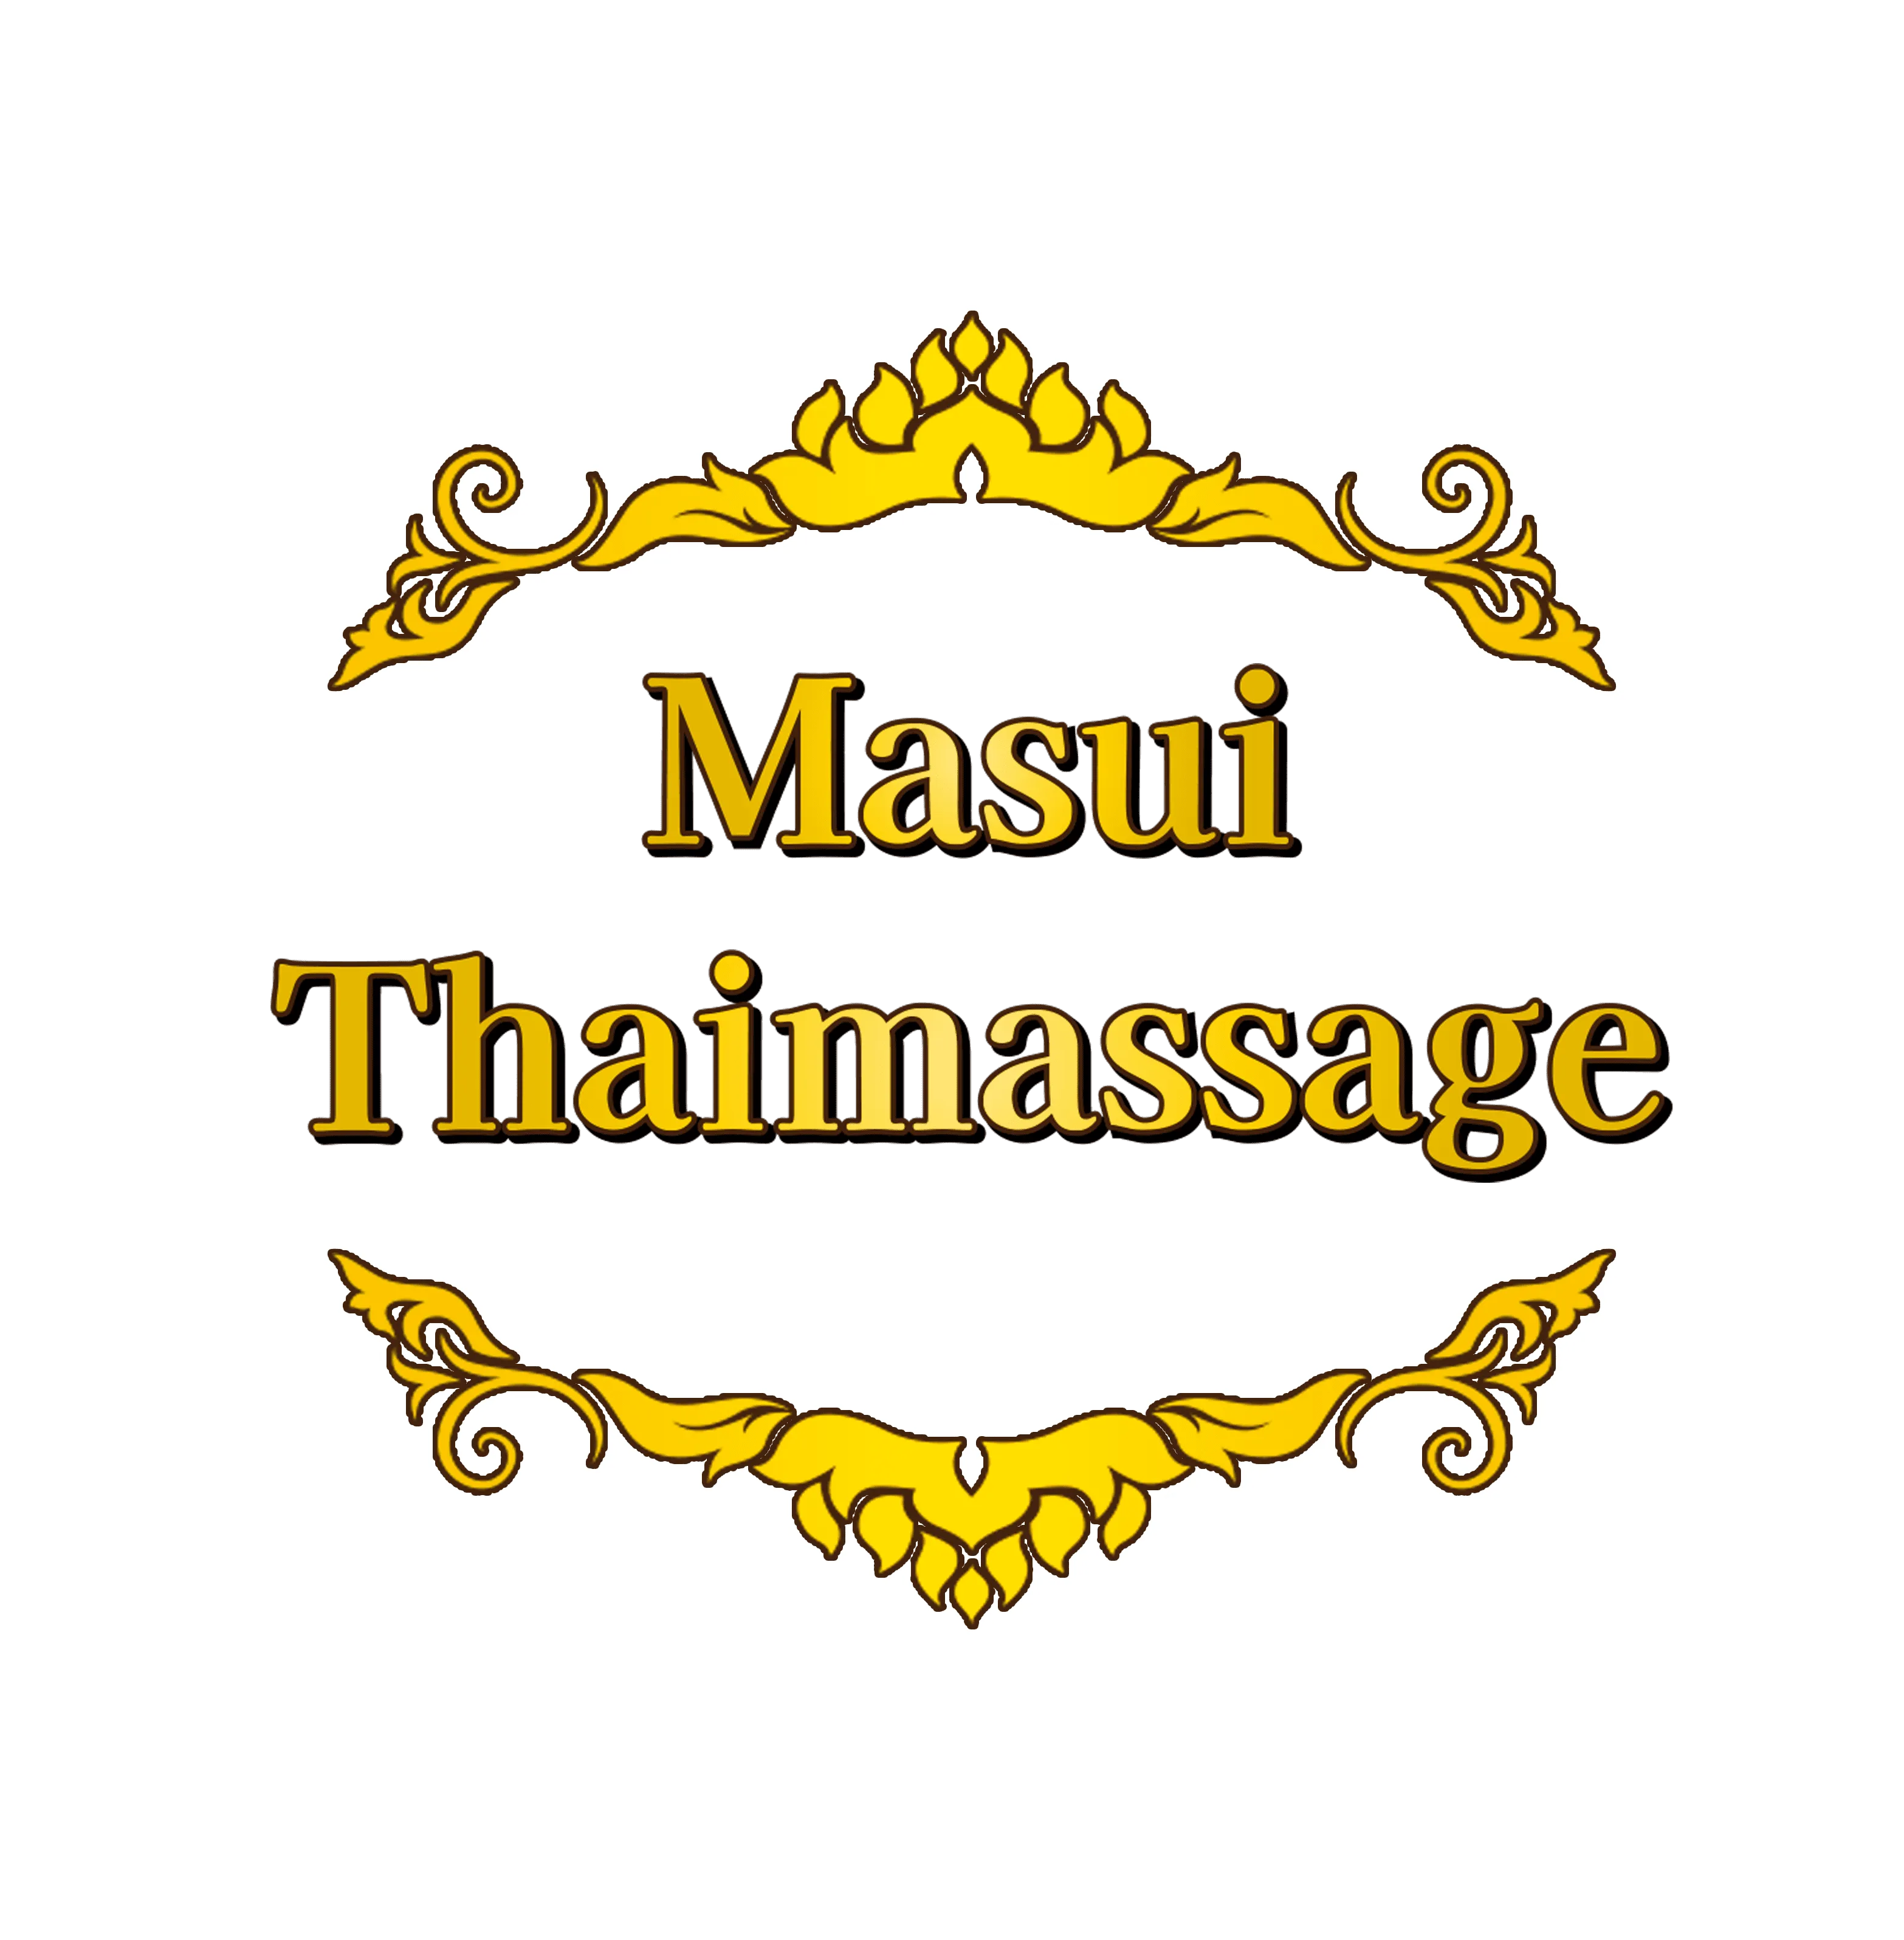 Masui Thaimassage